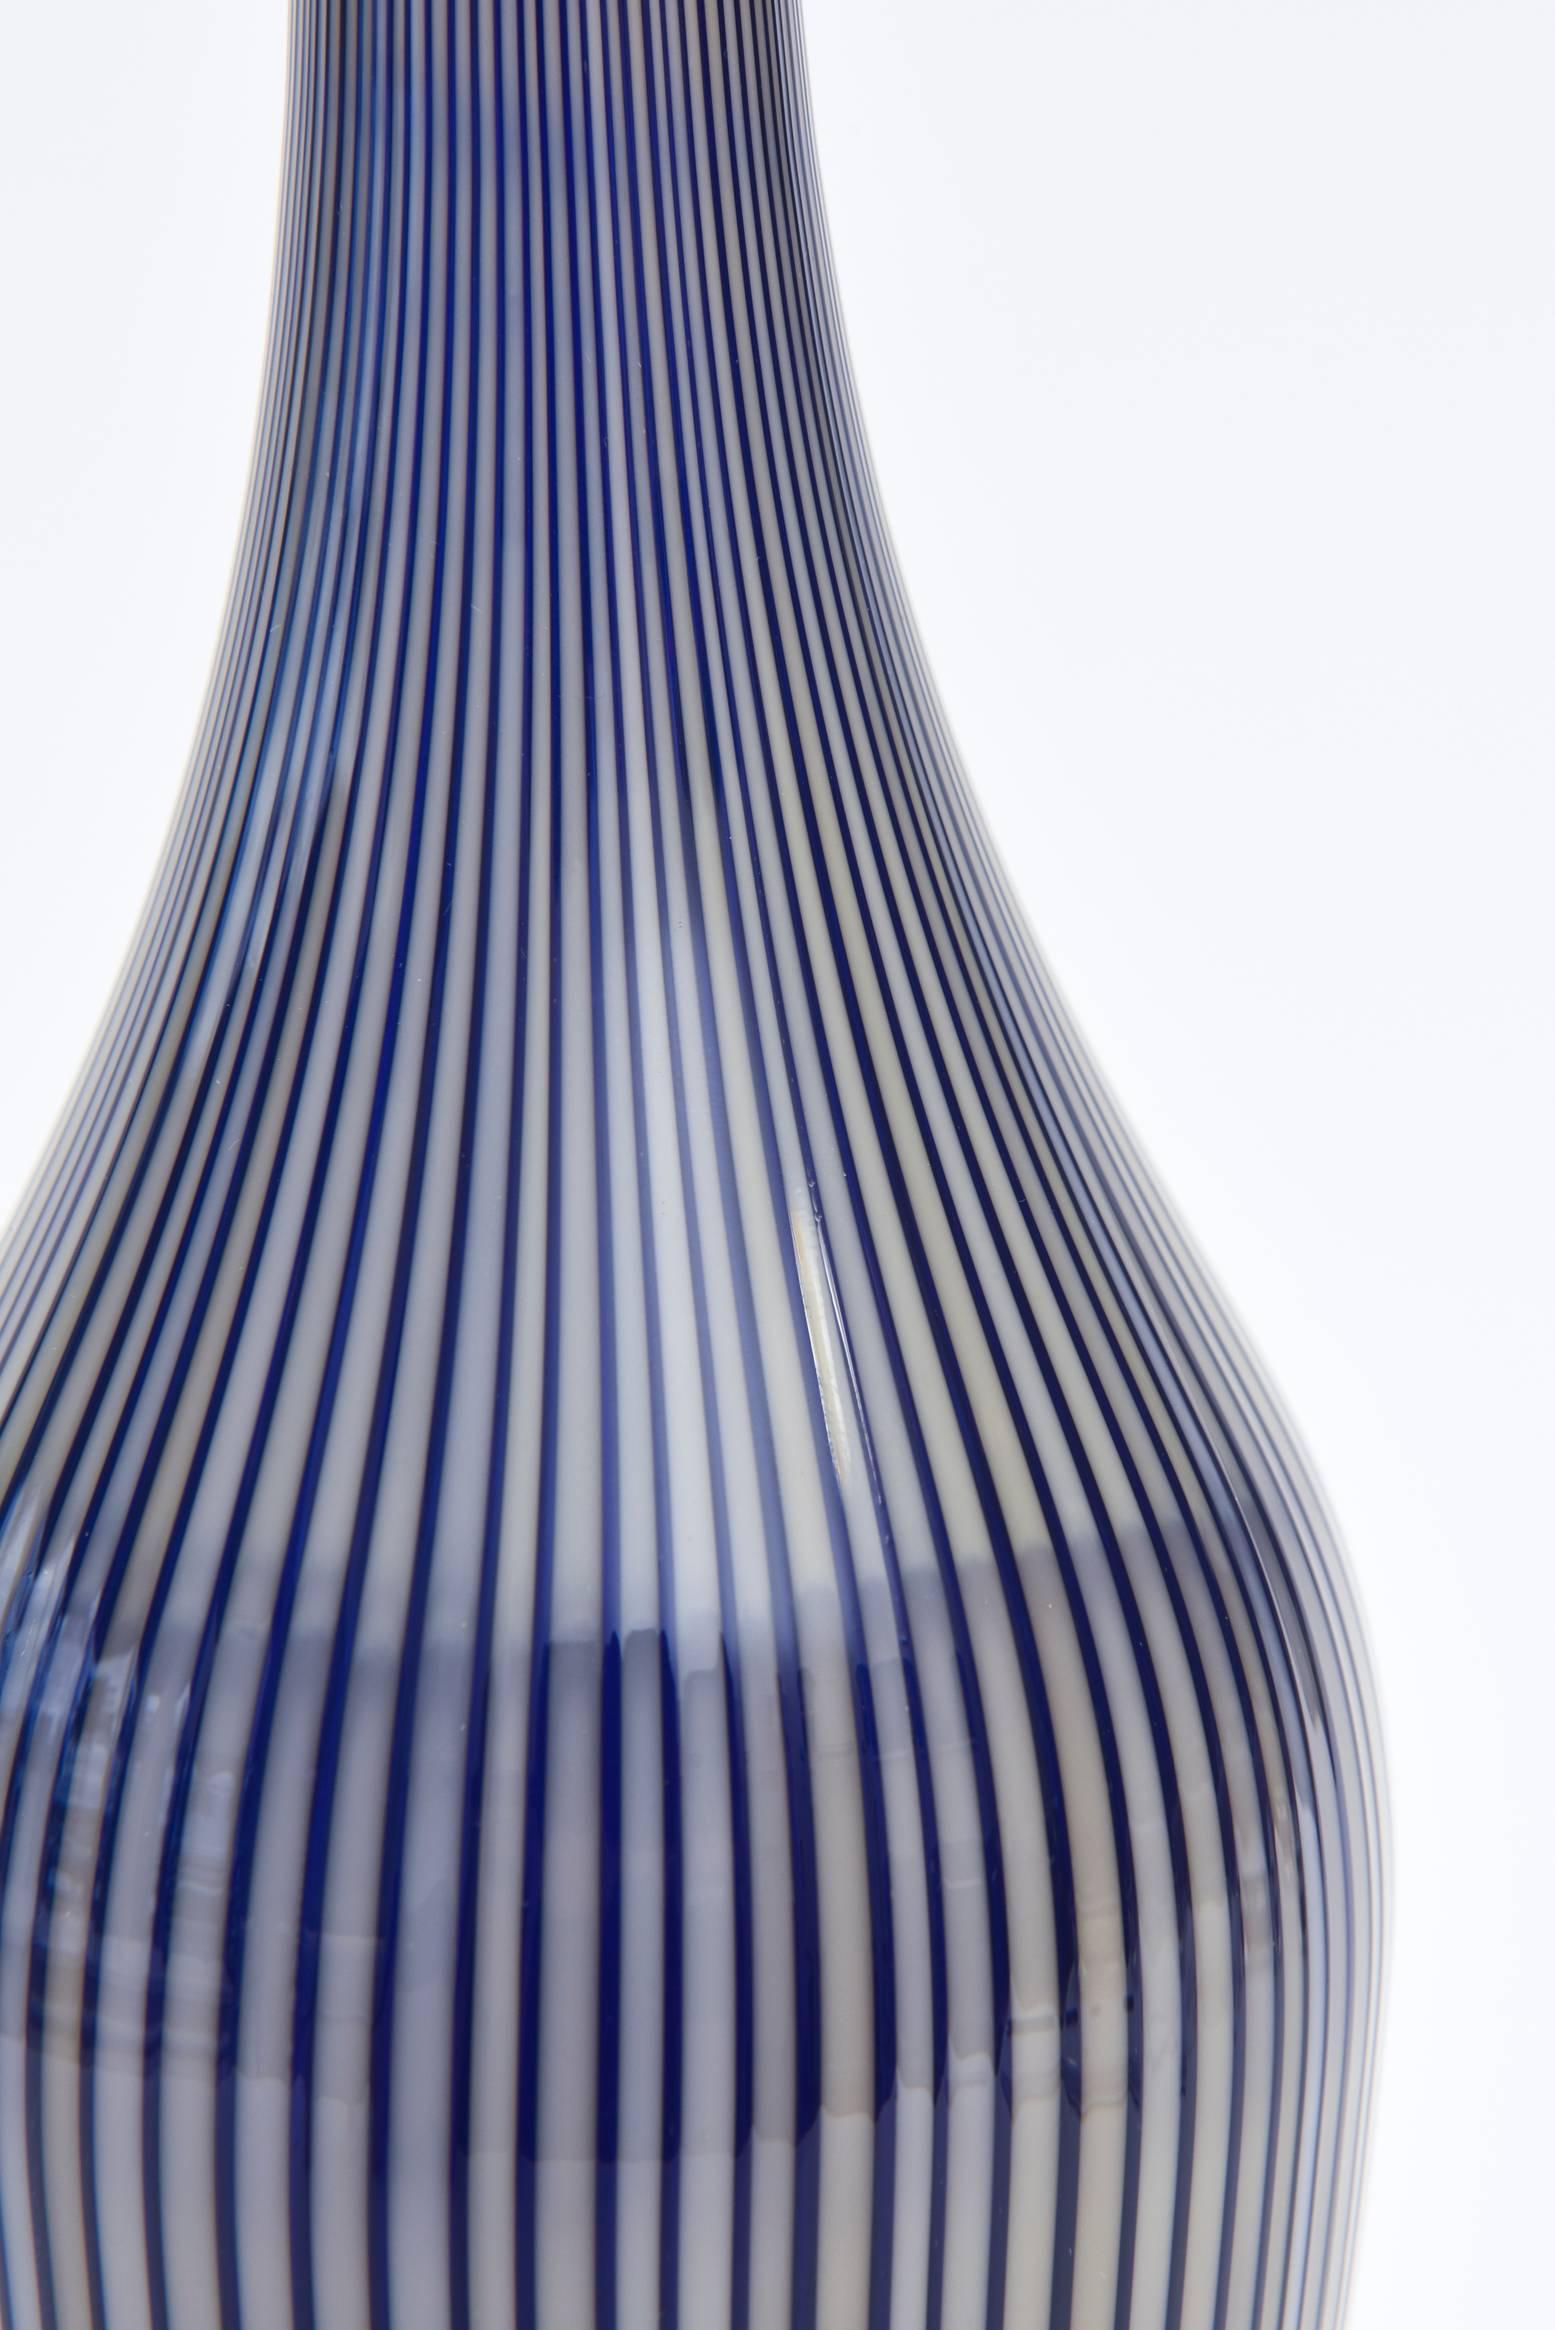 Italian Murano Cenedese Striped Bottle, Vessel, Glass Sculpture